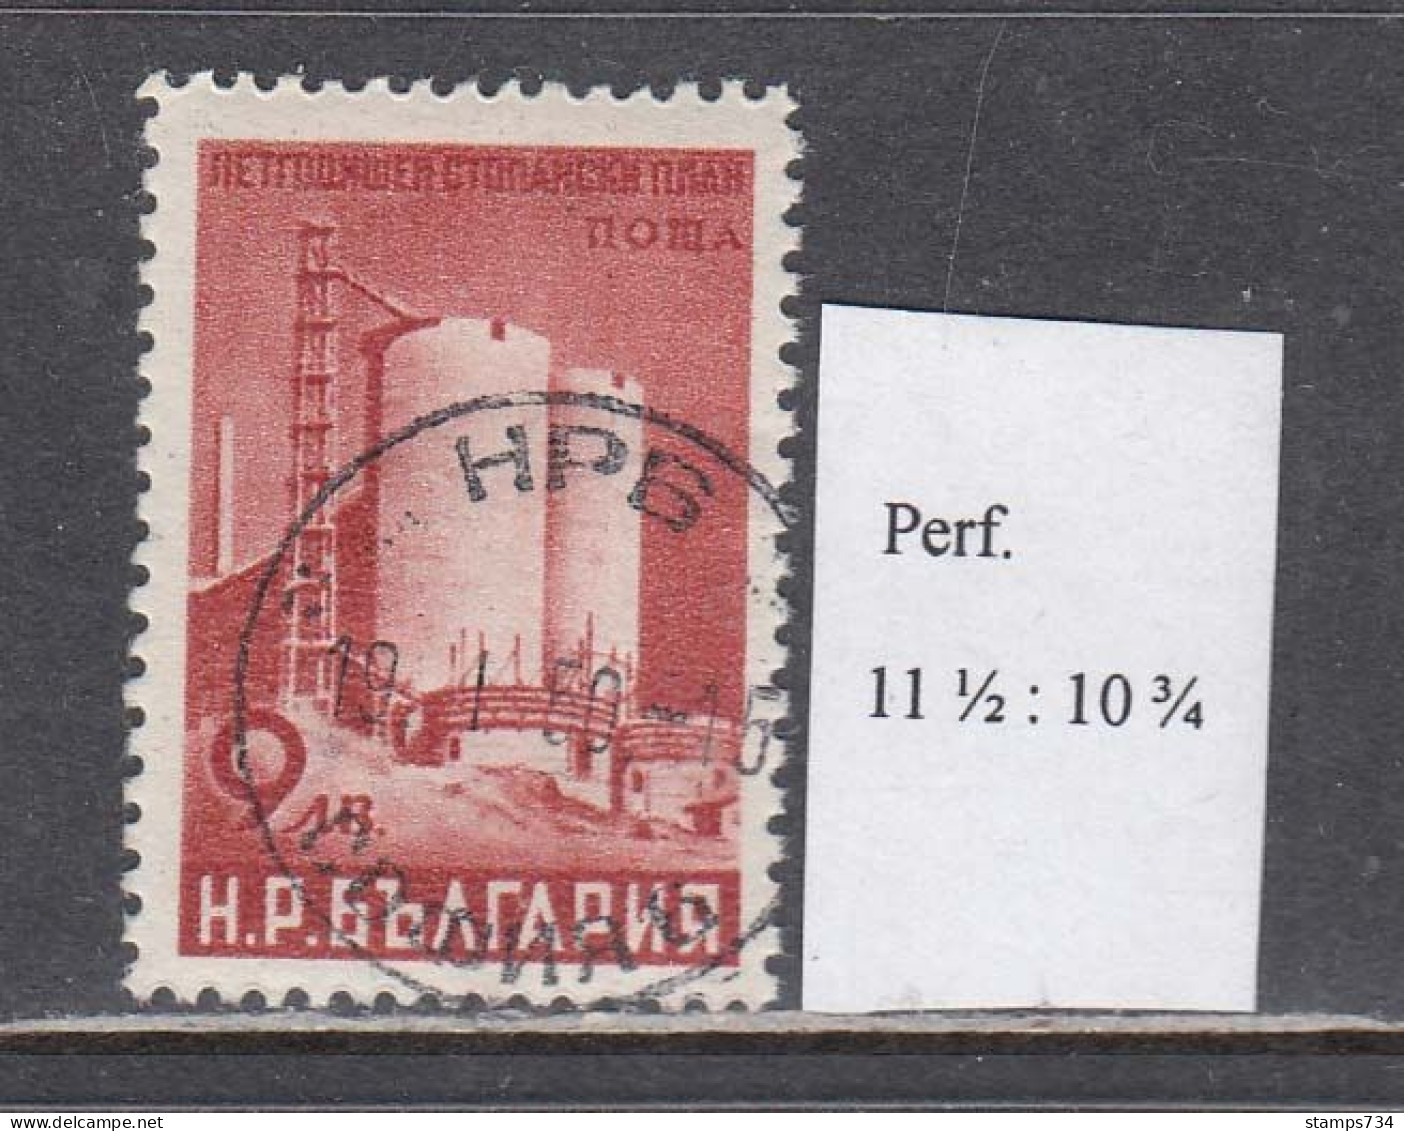 Bulgaria 1949 - Five-year Plan Of The Economy, Mi-Nr. 700, Rare Preforation 11 1/2: 10 3/4, Used - Gebraucht